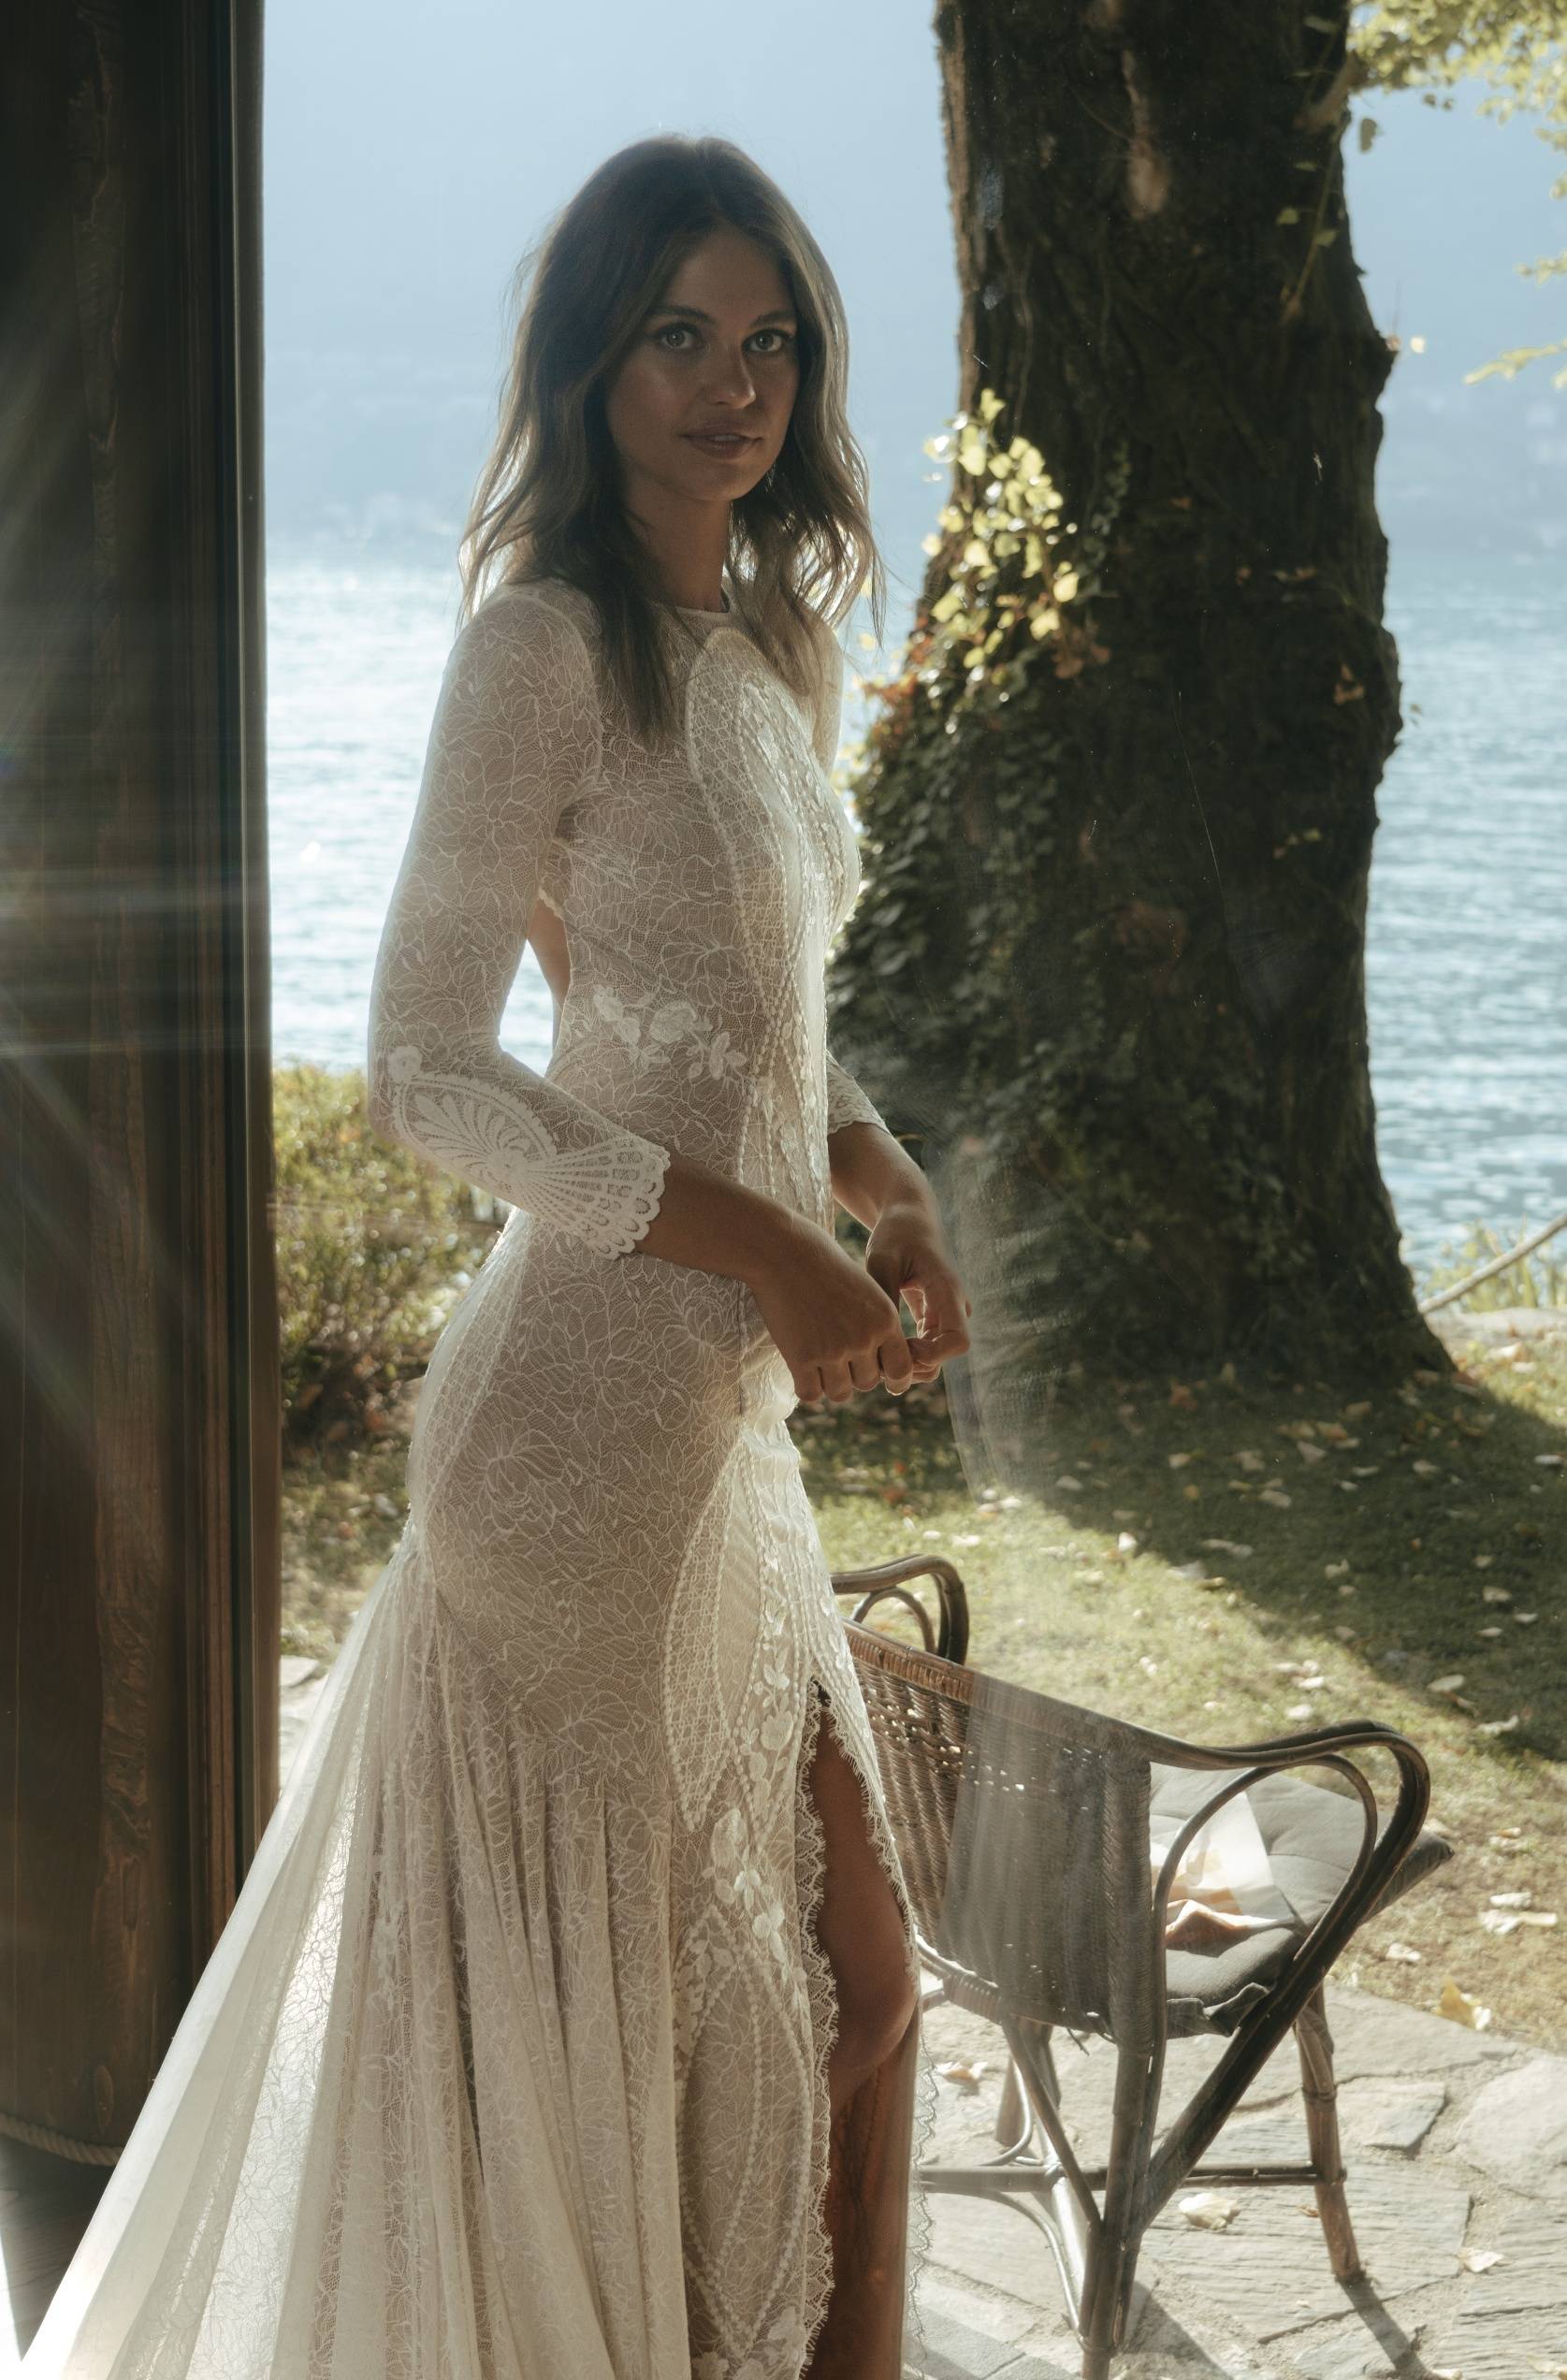 Model in Pierlot Gown with Italian coastline in background